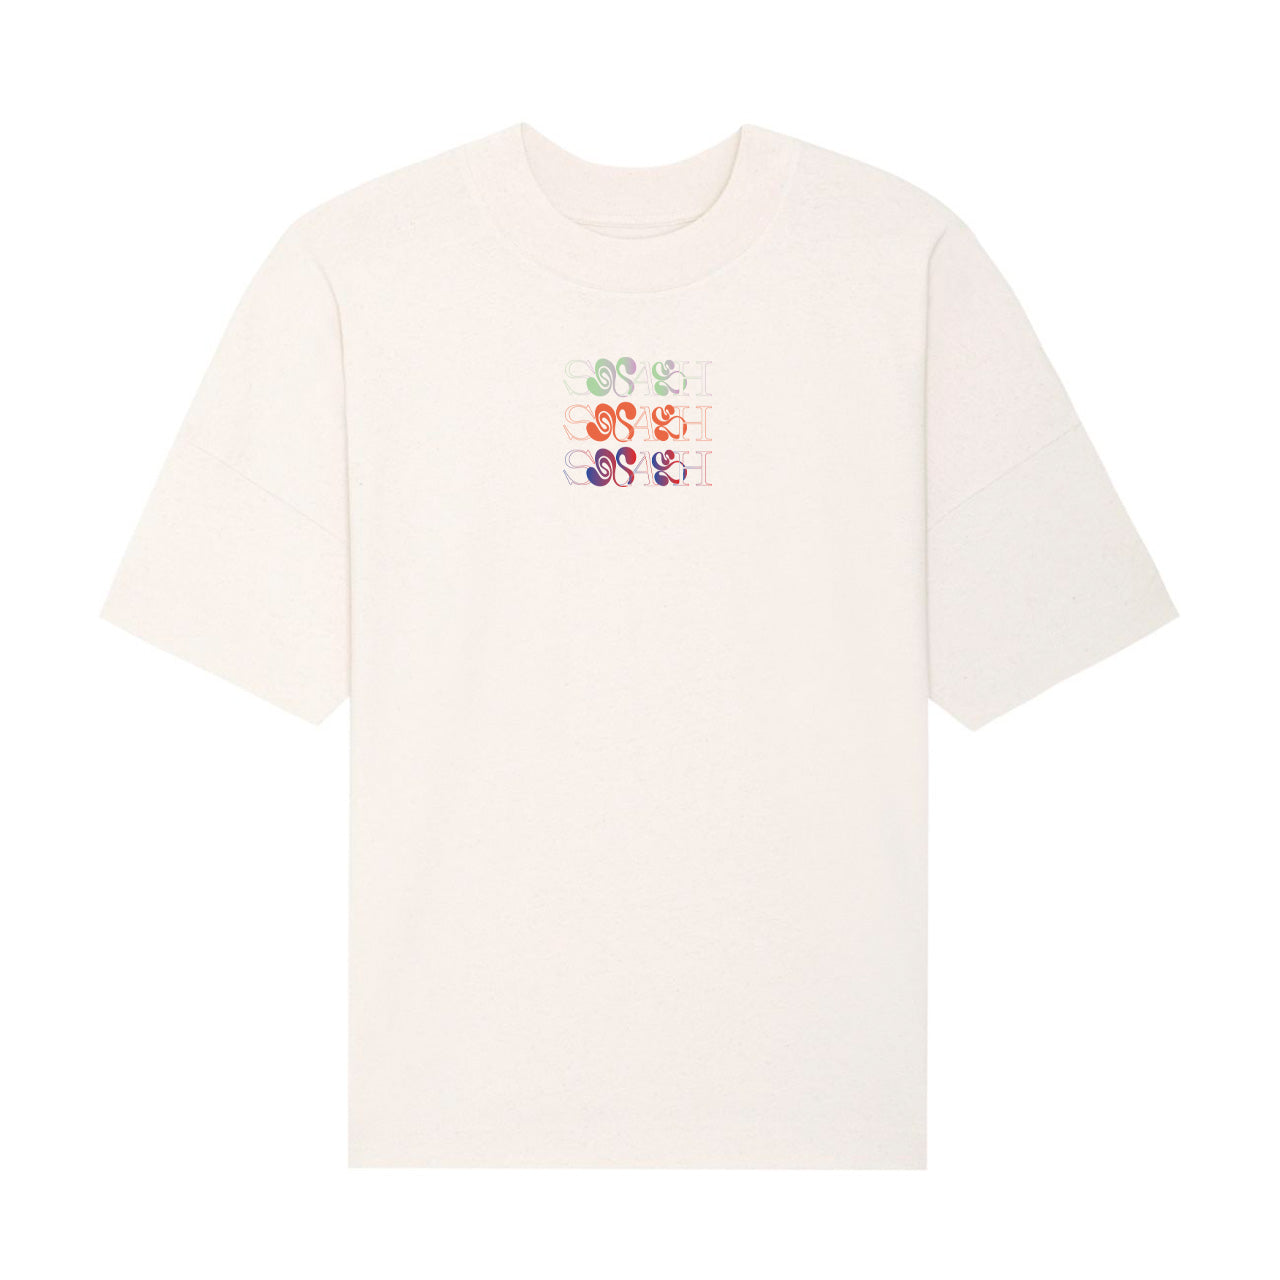 Snash - Swirl T-Shirt